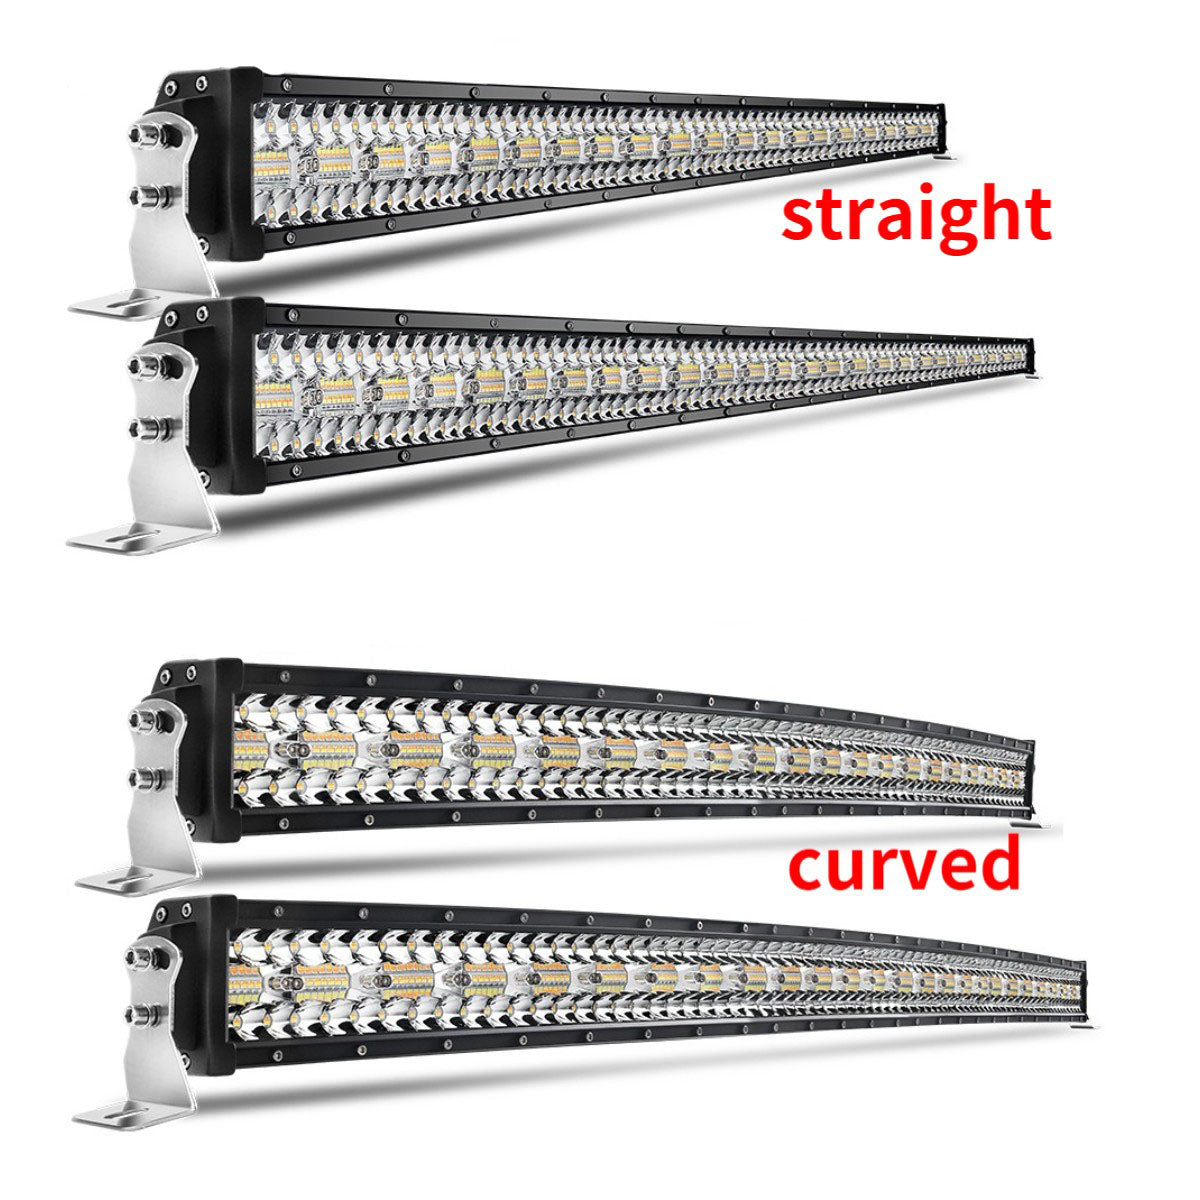 Barras de luz LED de la serie combinada de luces estroboscópicas de dos colores de 22 a 50 pulgadas de la serie RQT31